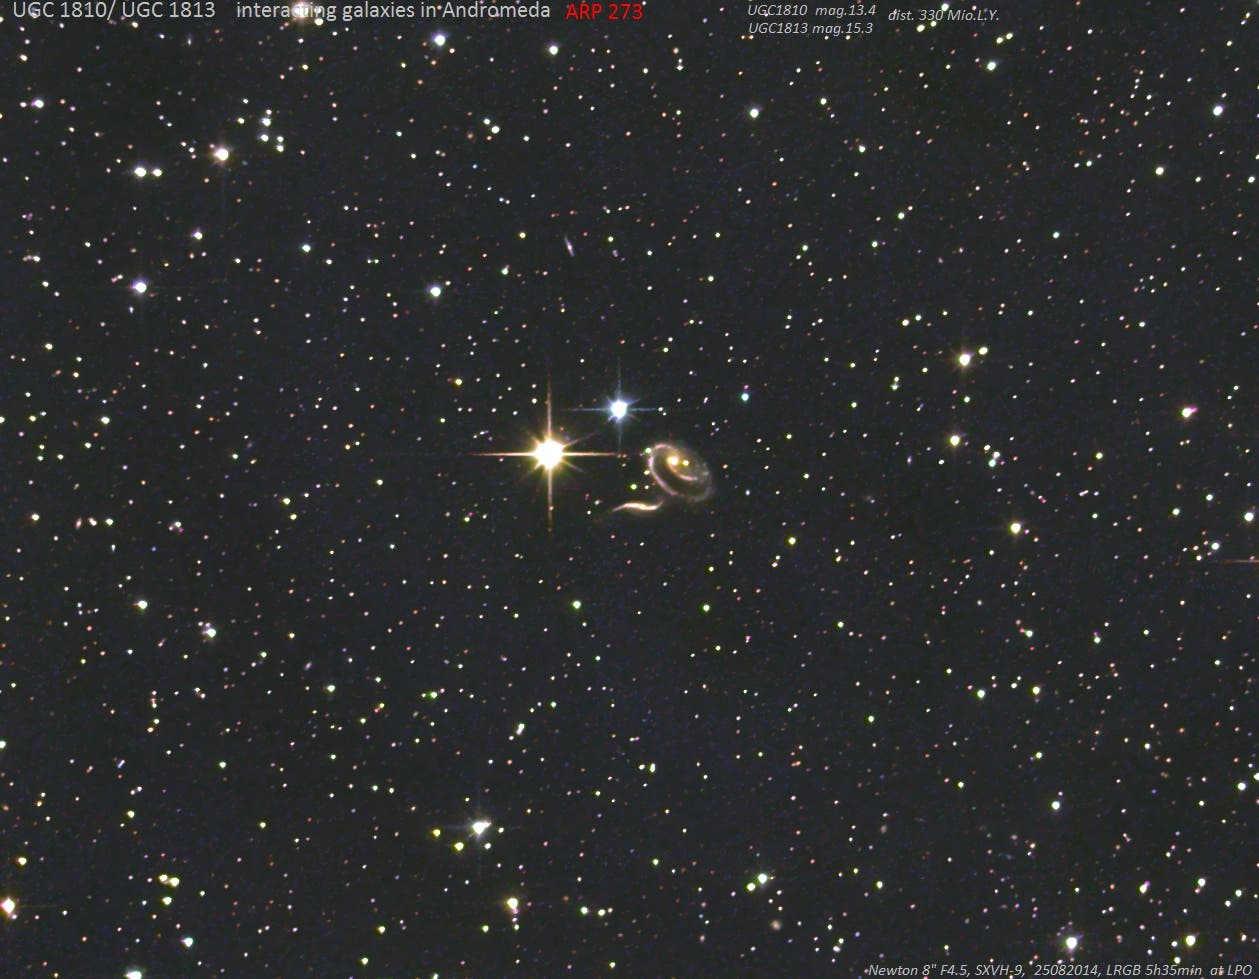 Arp 273 - wechselwirkende Galaxien in Andromeda